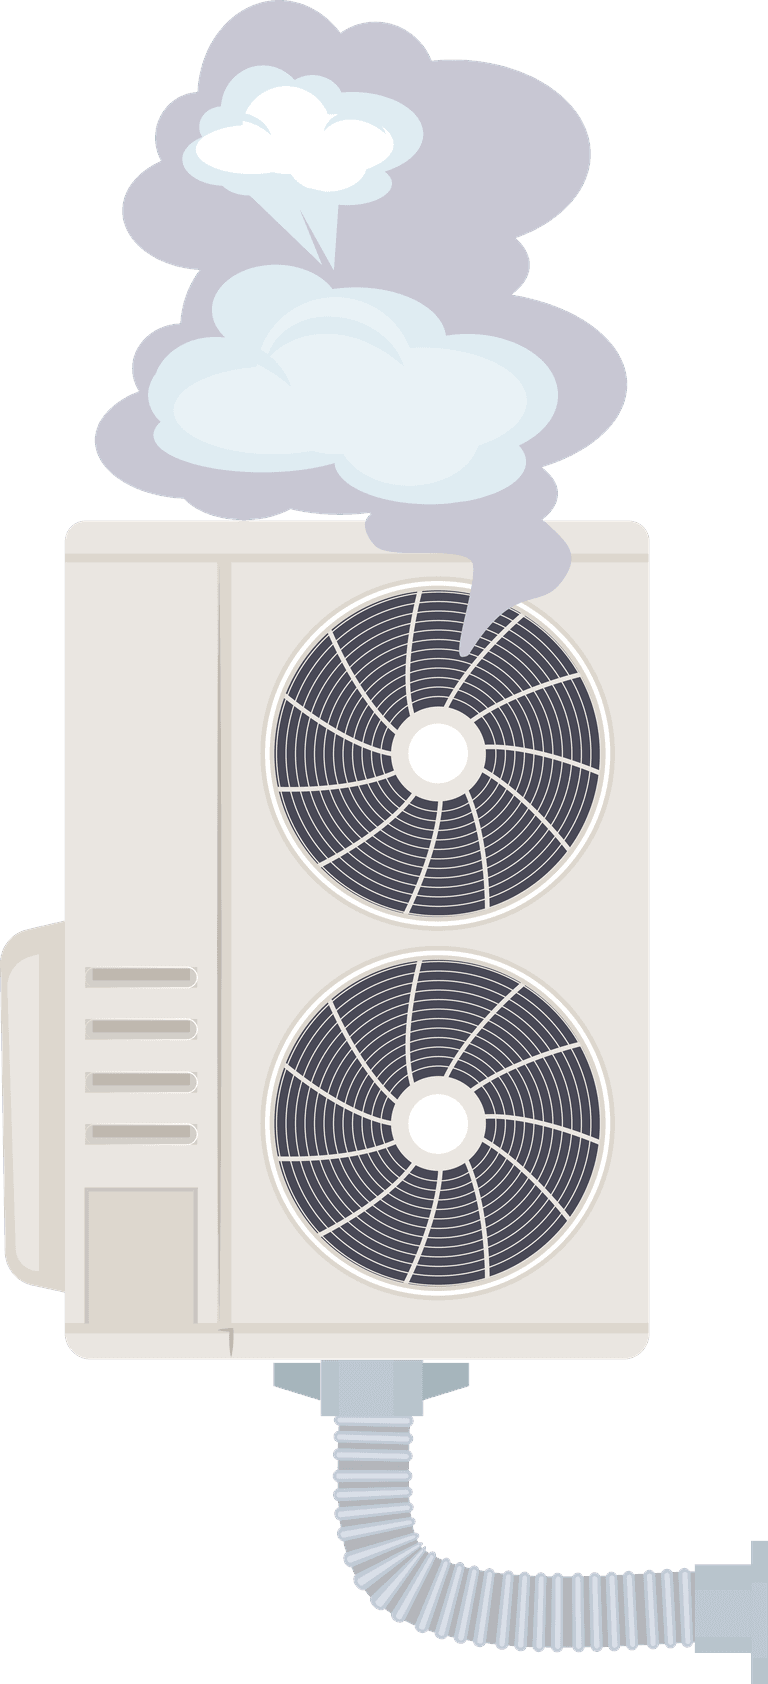 damaged conditioner broken home air systems wind ventilation efficient